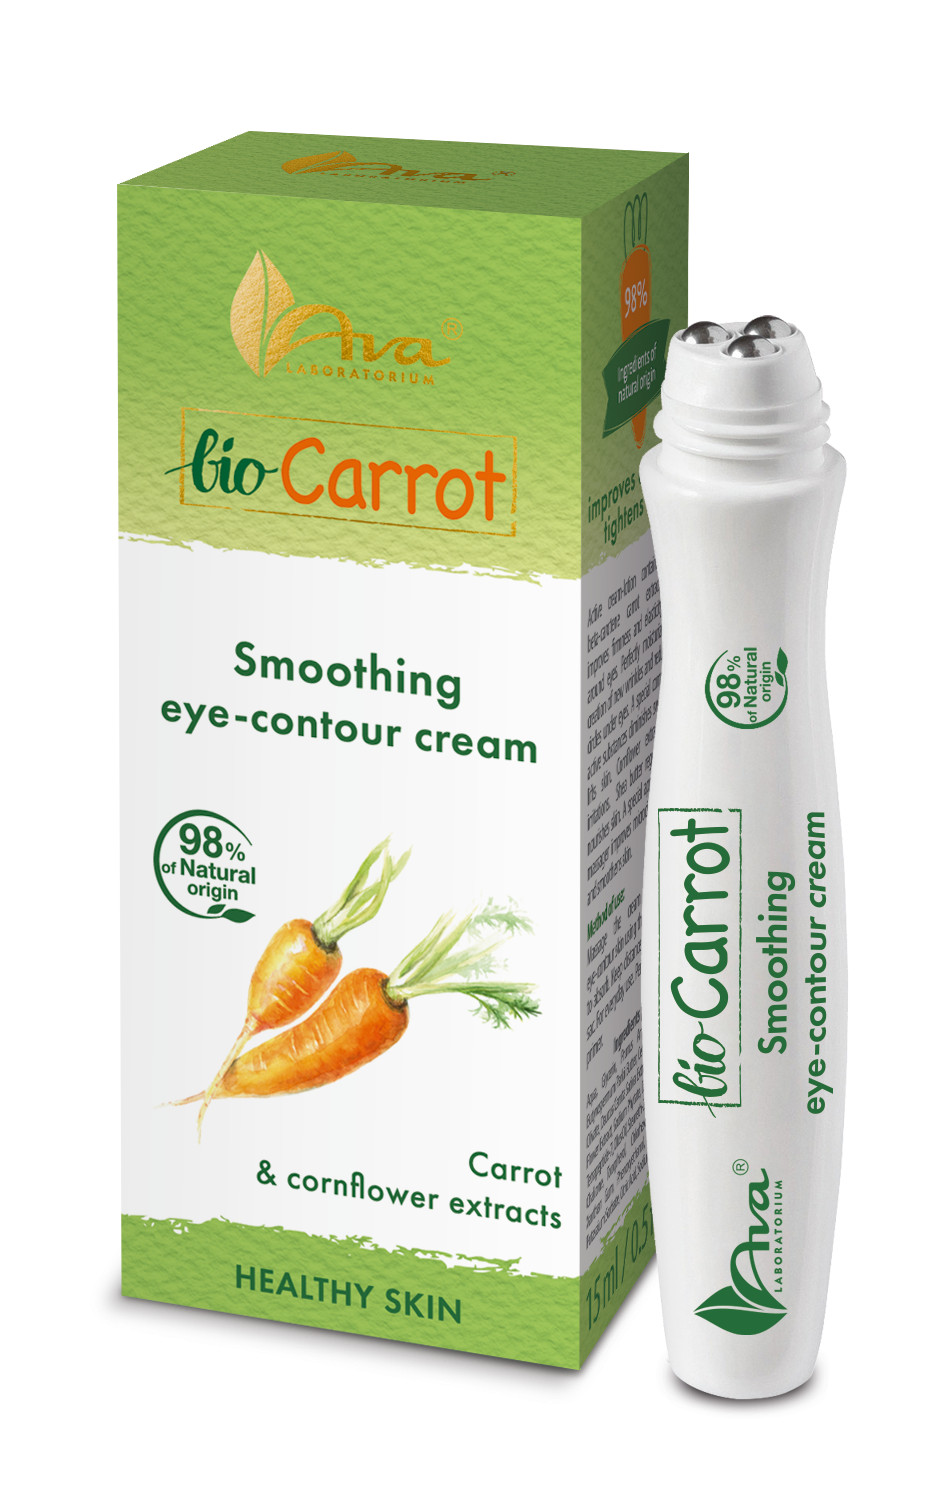 Bio Carrot – Smoothing eye-contour cream